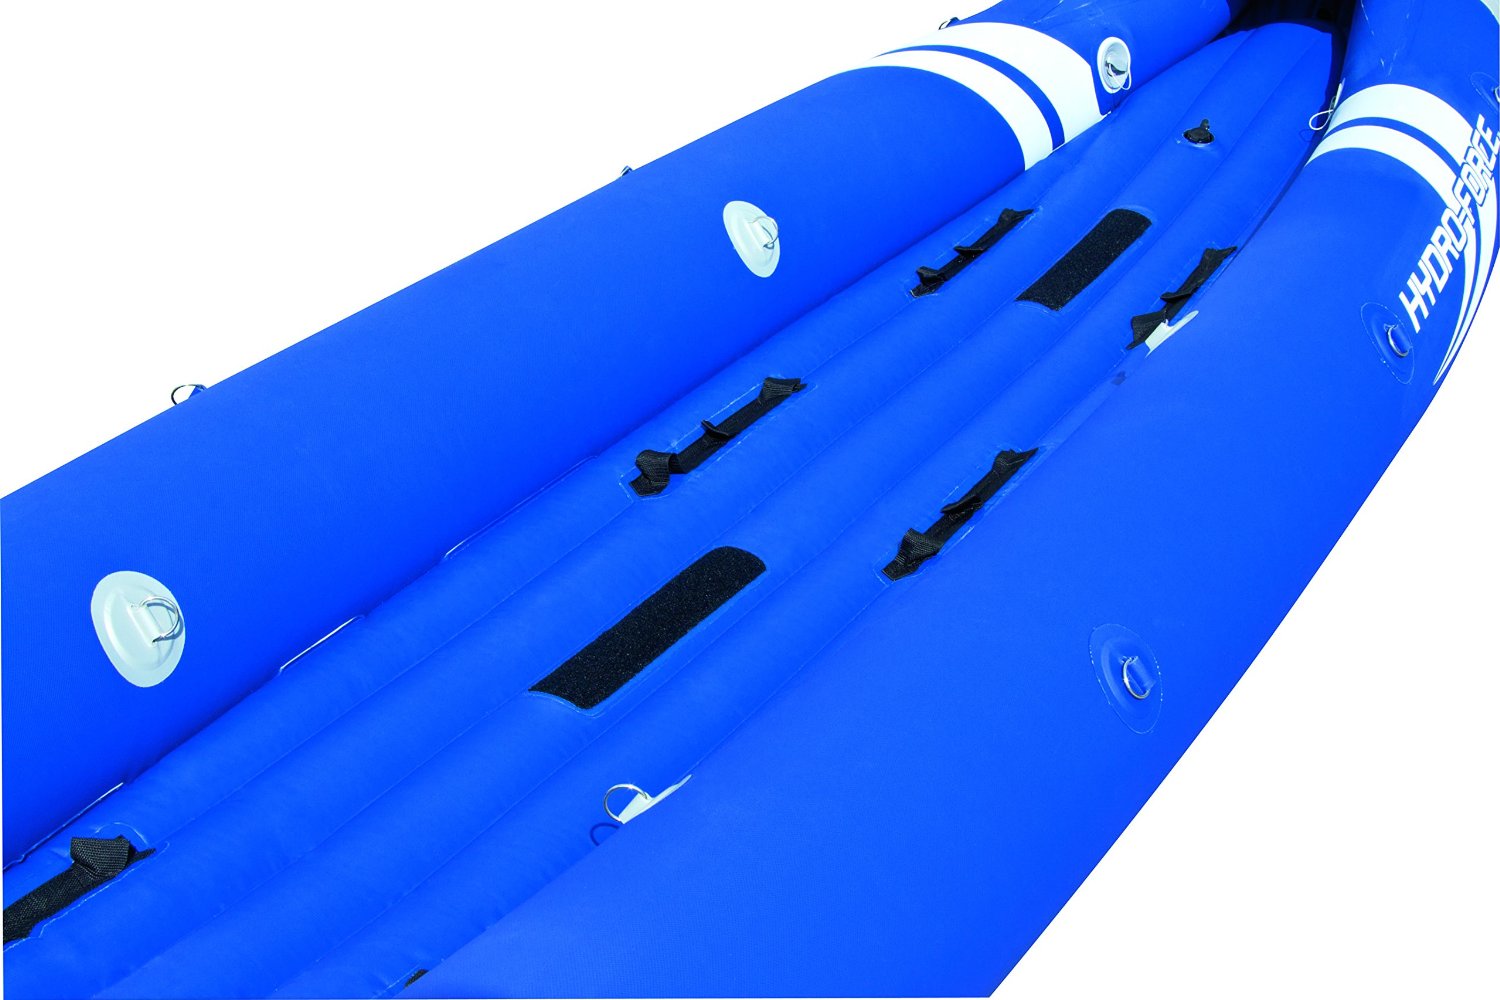 ::Bestway Bolt X2 2 Person Inflatable Outdoor Kayak Boat Canoe Raft w/ Pump & Oars